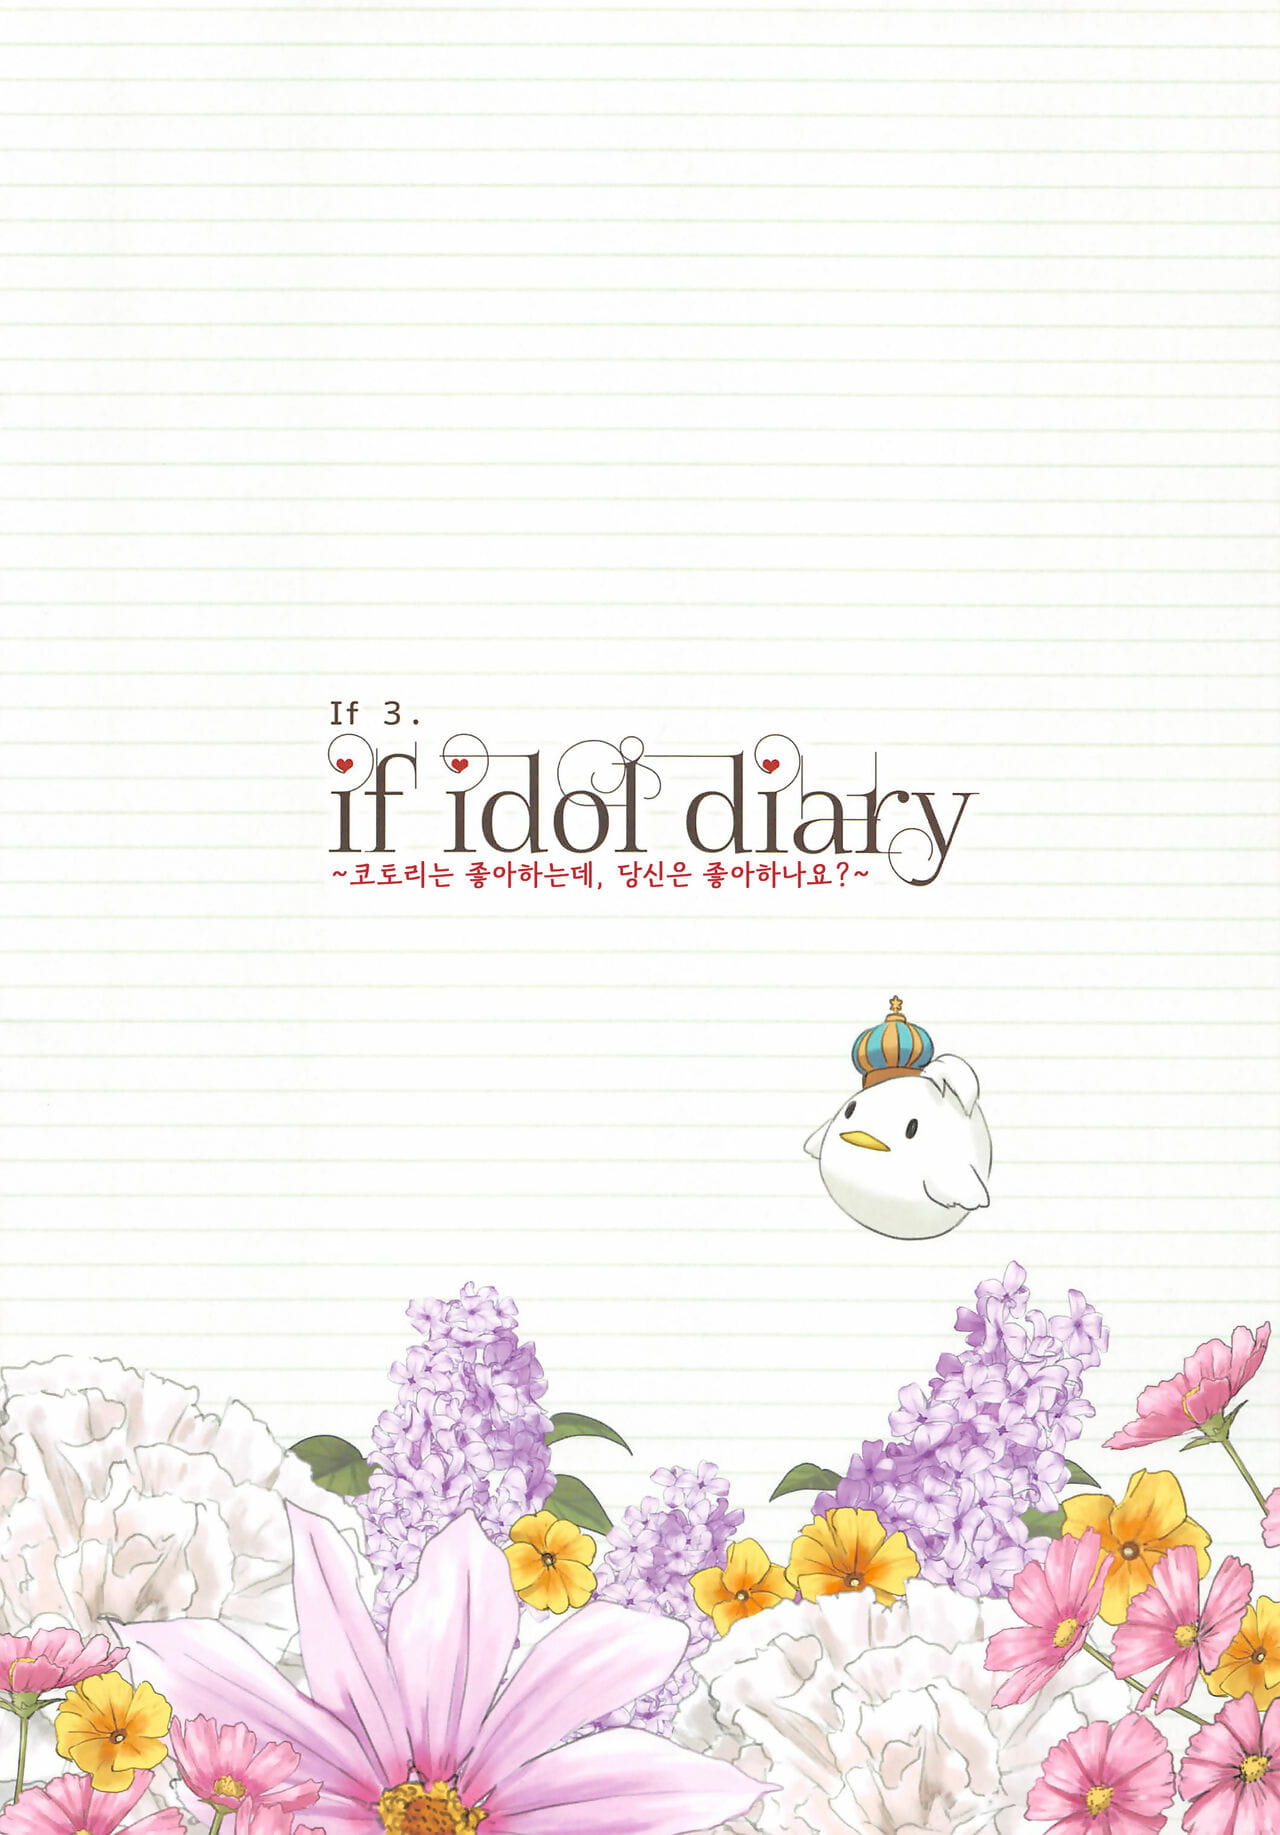 C94 Dai 6 Kichi Kichirock if idol diary Soushuuhen ~Kotori no Ura Nikki~ - if idol diary 총집편 ~코토리의 비밀 일기~ Love Live! Korean - part 2